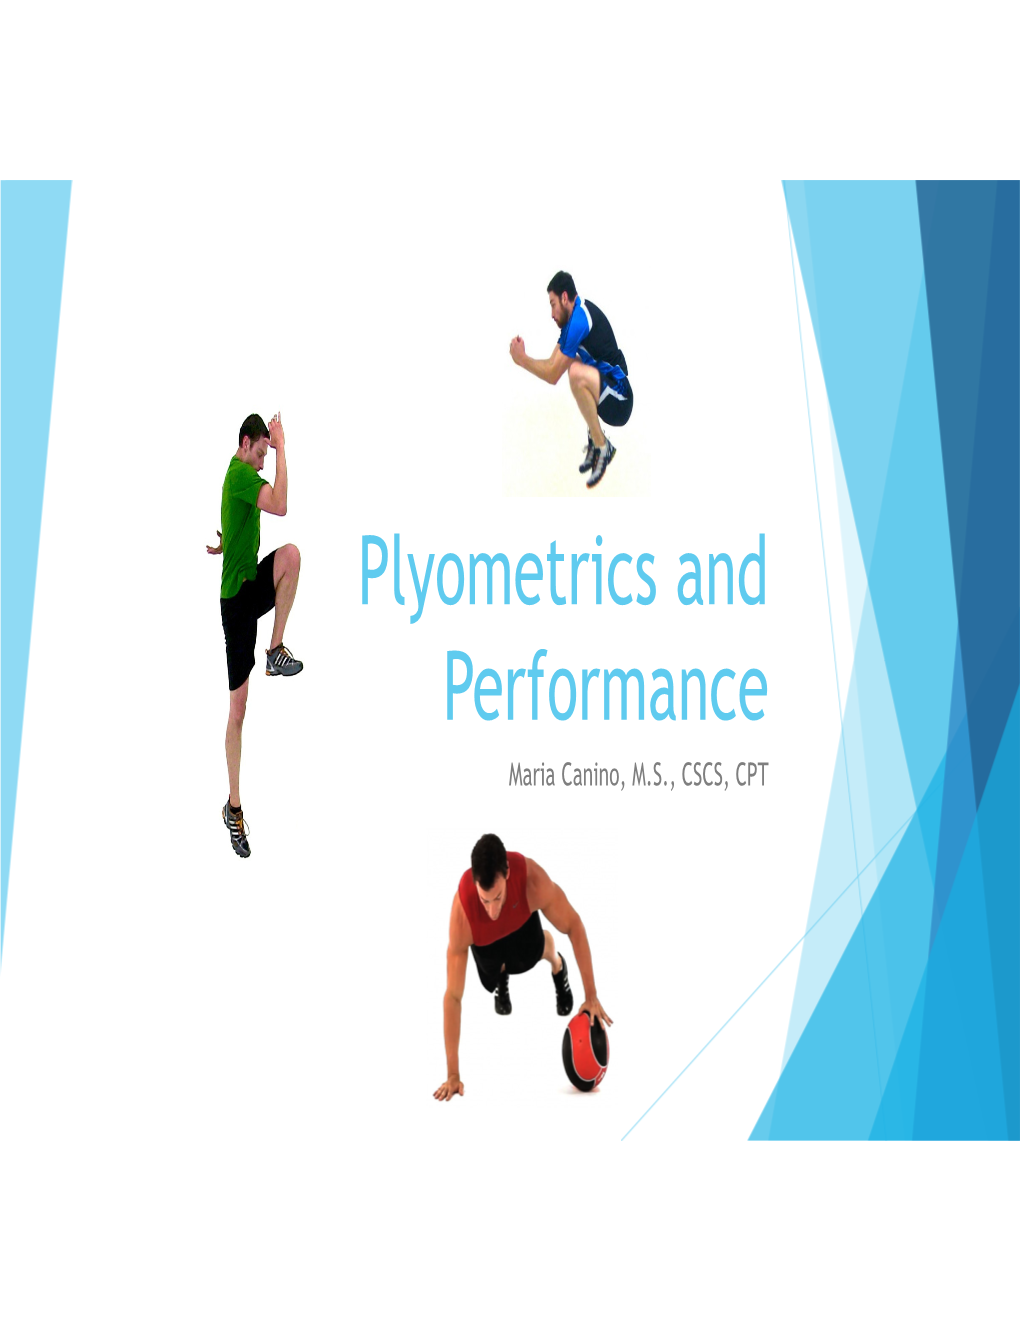 Plyometrics and Performance Maria Canino, M.S., CSCS, CPT What Are “Plyometrics?”